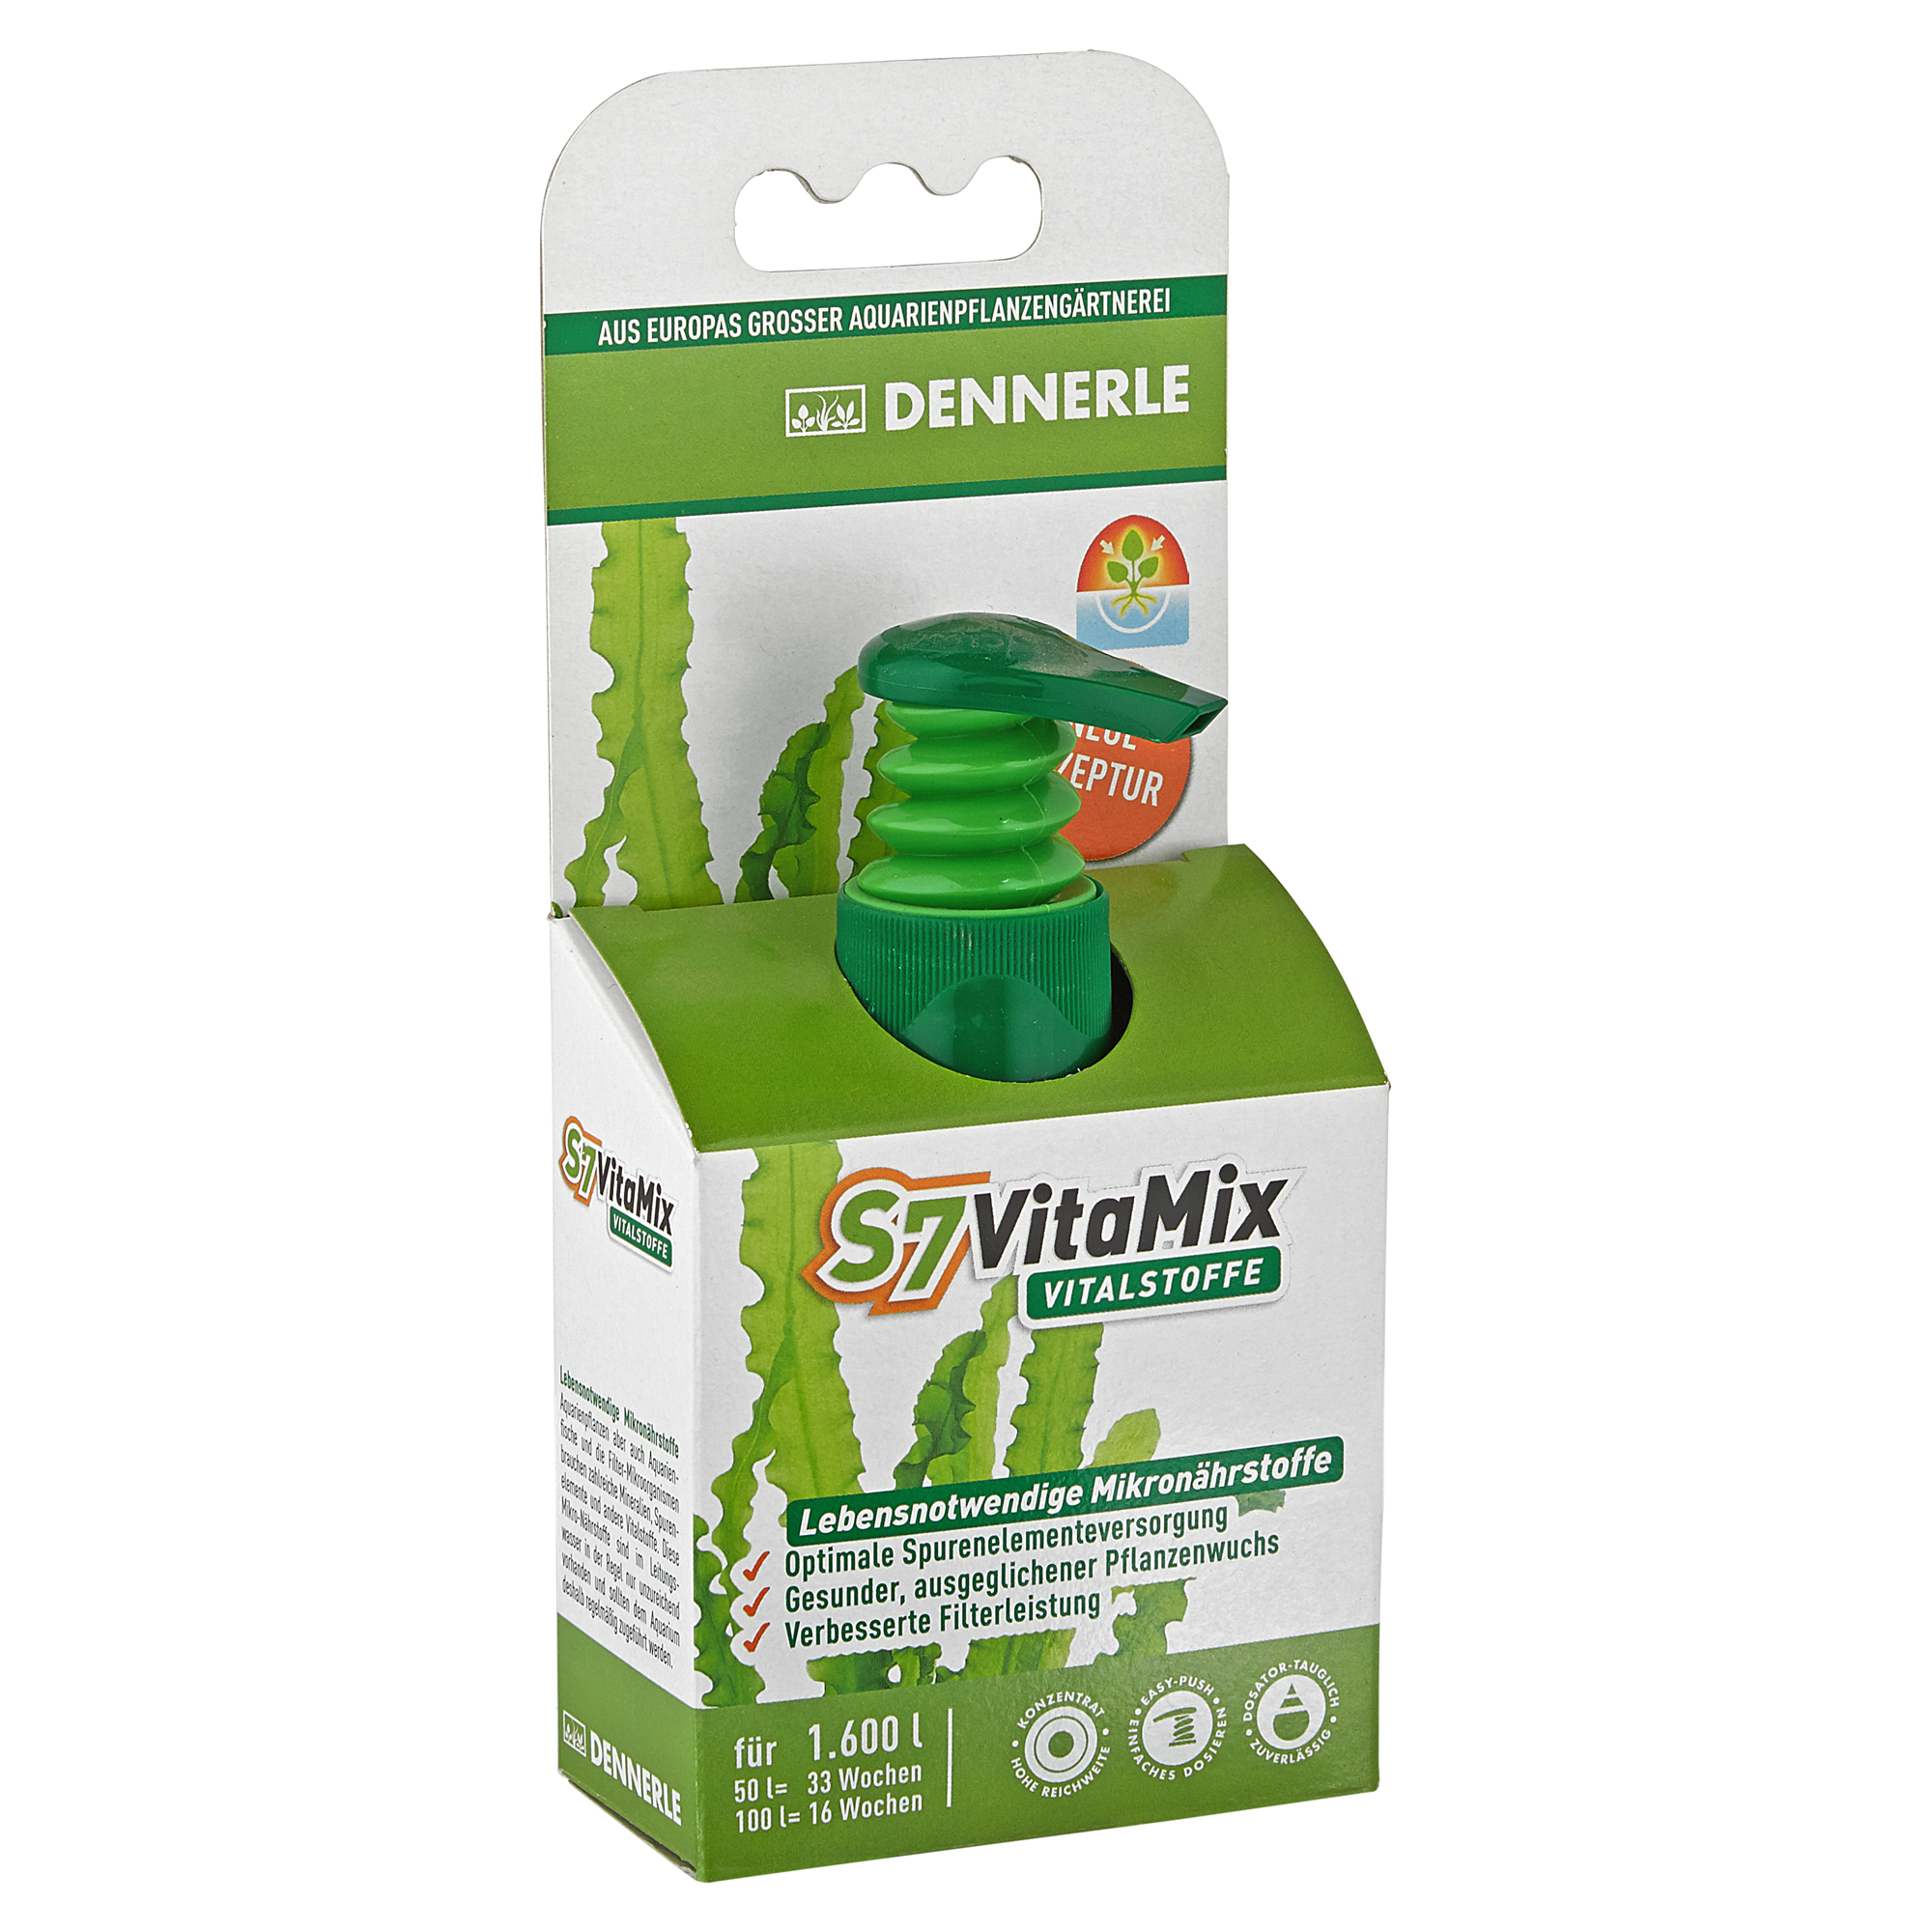 Vitalstoffmix "S7 VitaMix" 50 ml + product picture